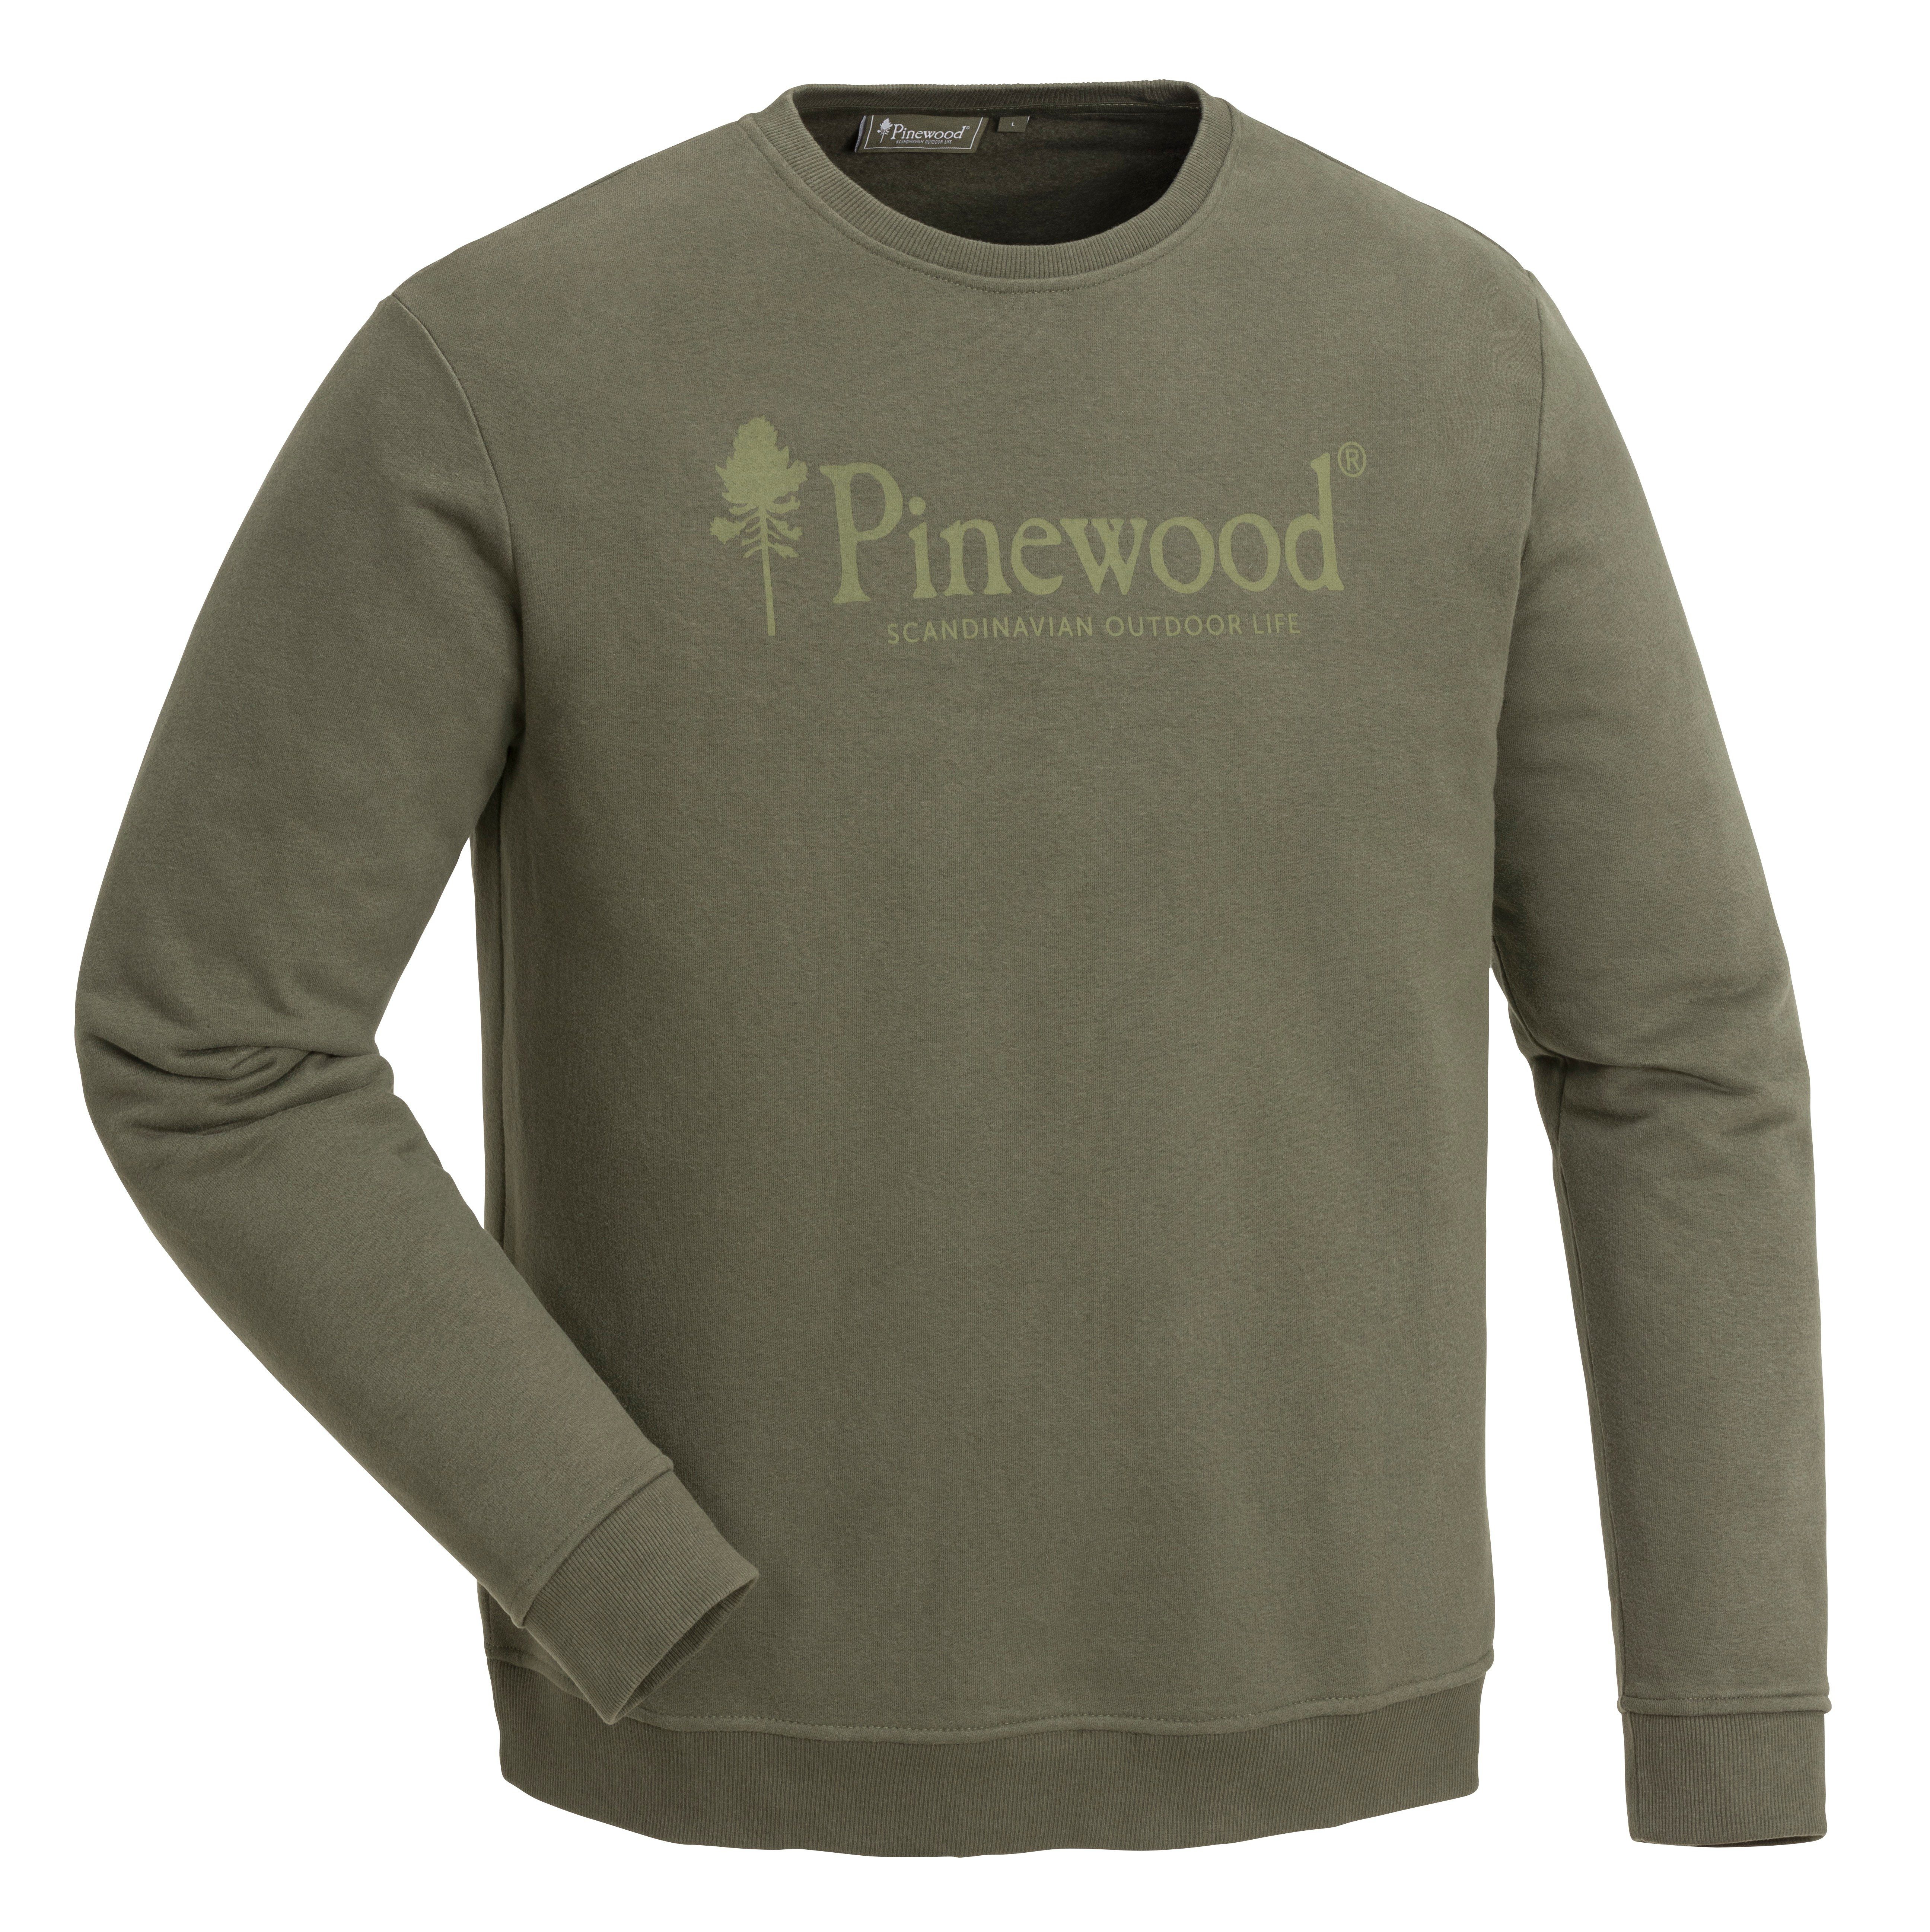 & Logoprint SUNNARYD Sweatshirt Pinewood mit green MEN Sweatshirt Pullover